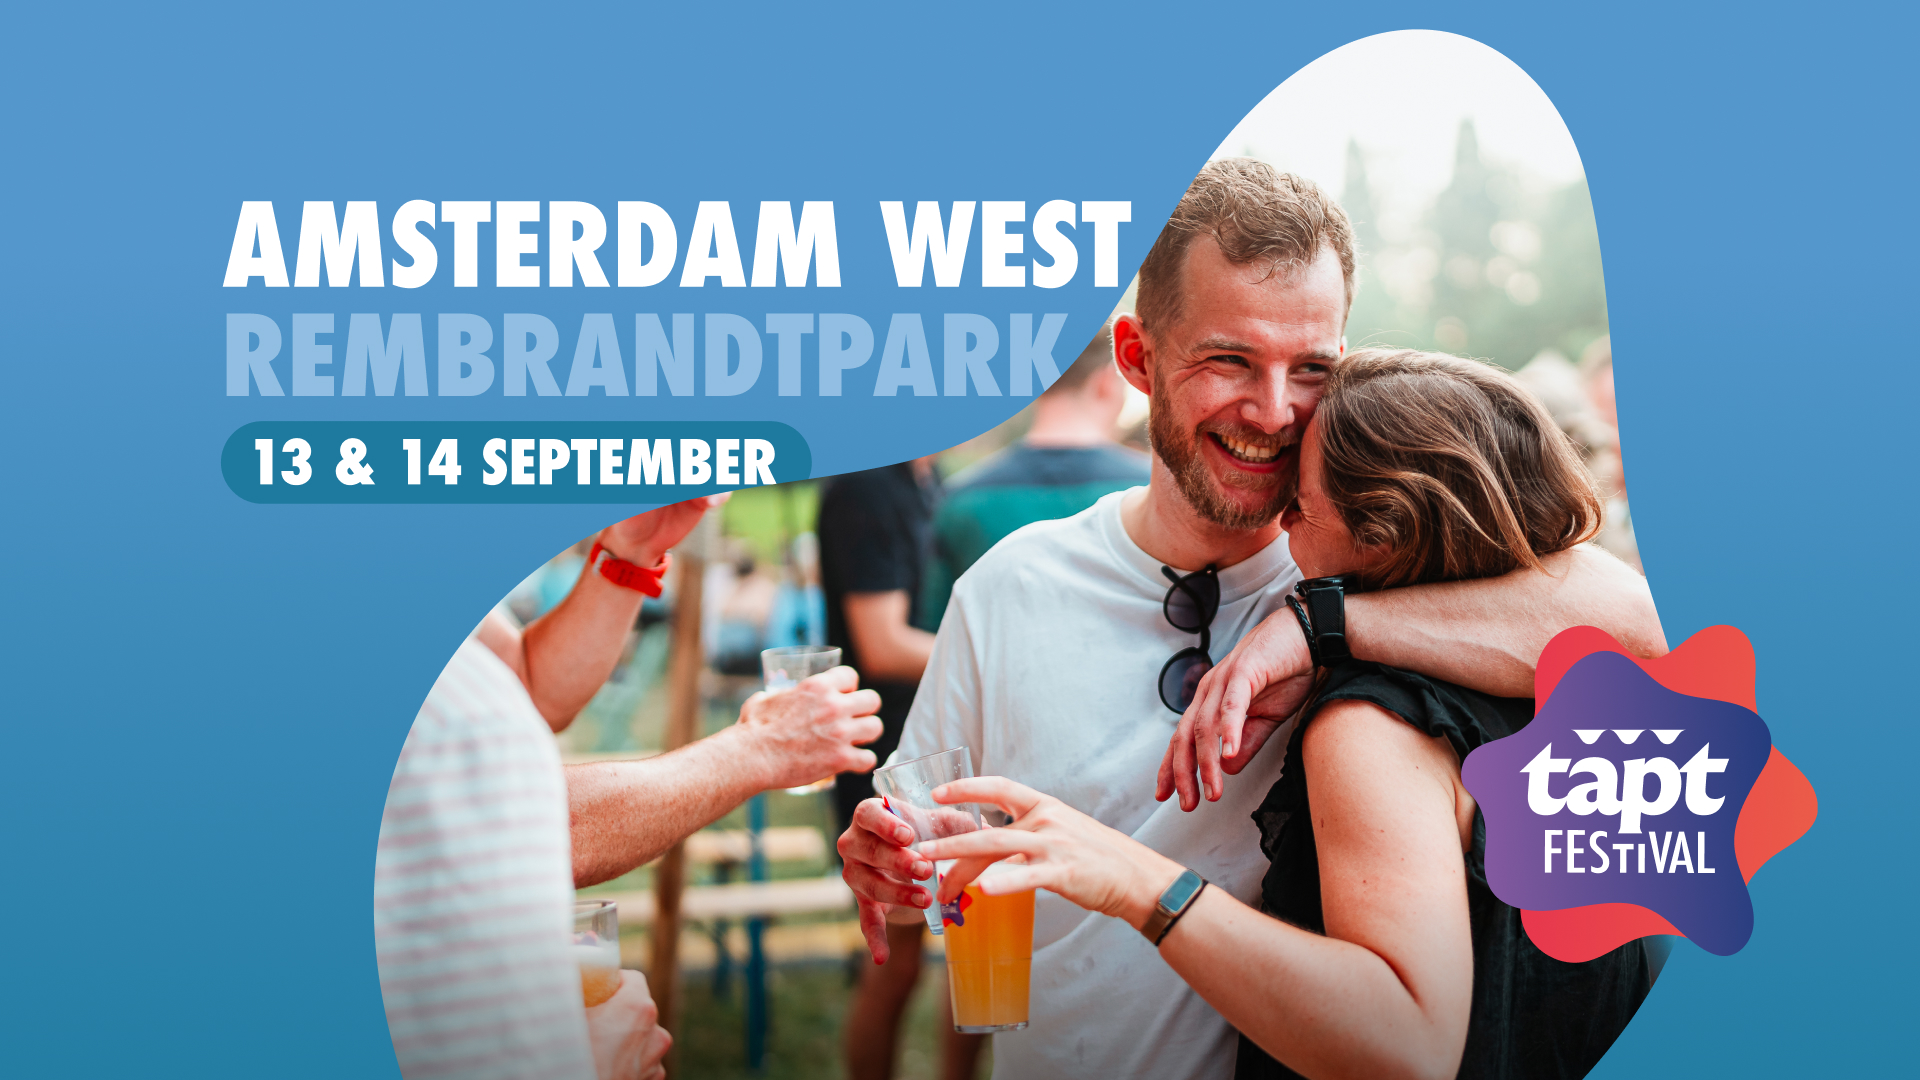 TAPT Festival Amsterdam West